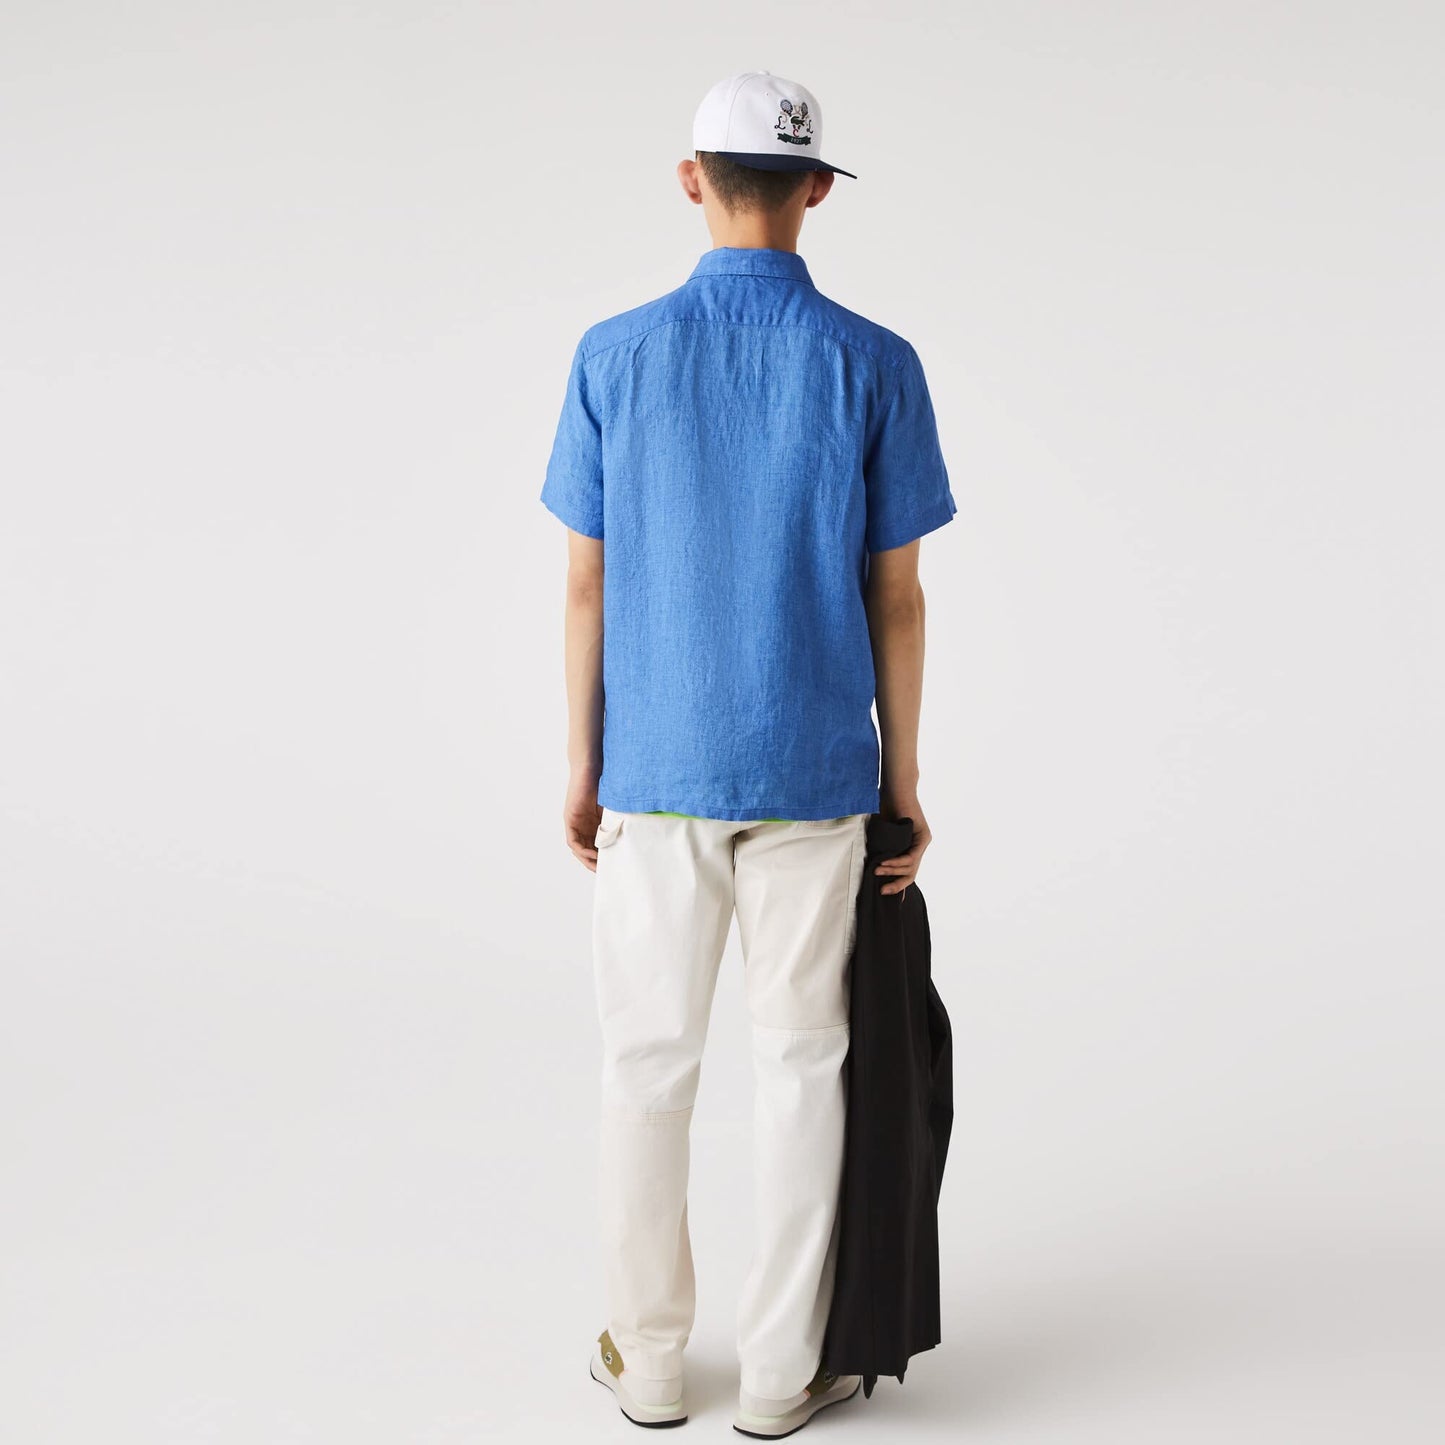 Lacoste Men's Regular Fit Shirt (Blue)